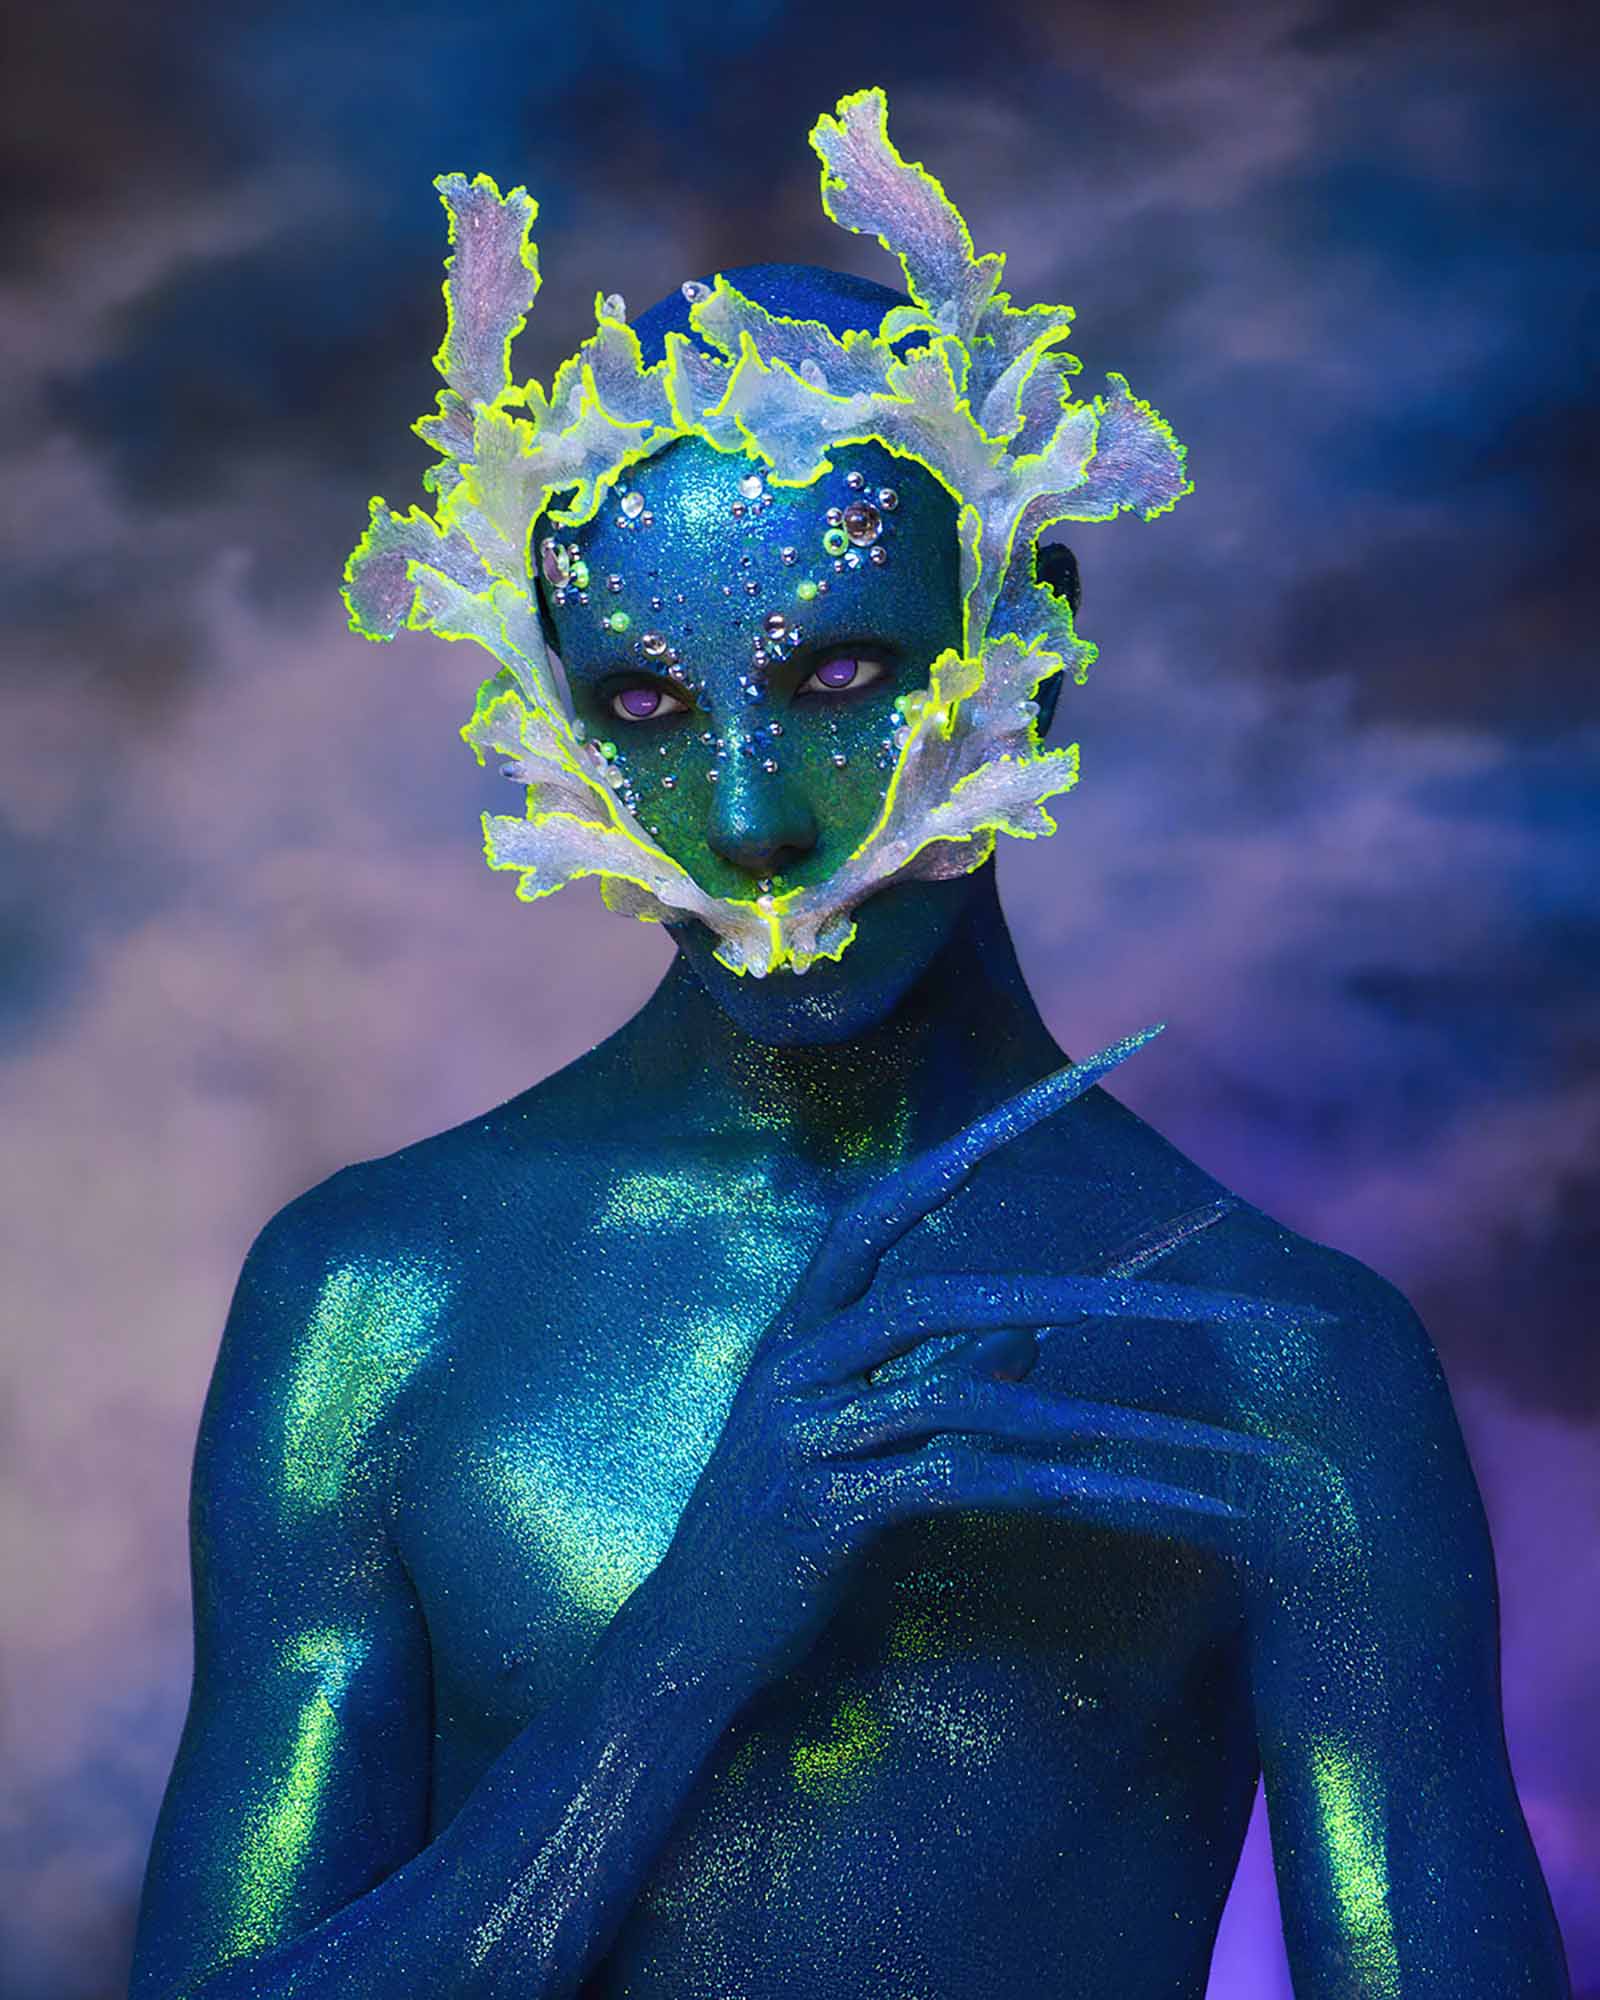 "Lucid Luminaries", collaboration with Ryan Burke I Photo: Ryan Burke